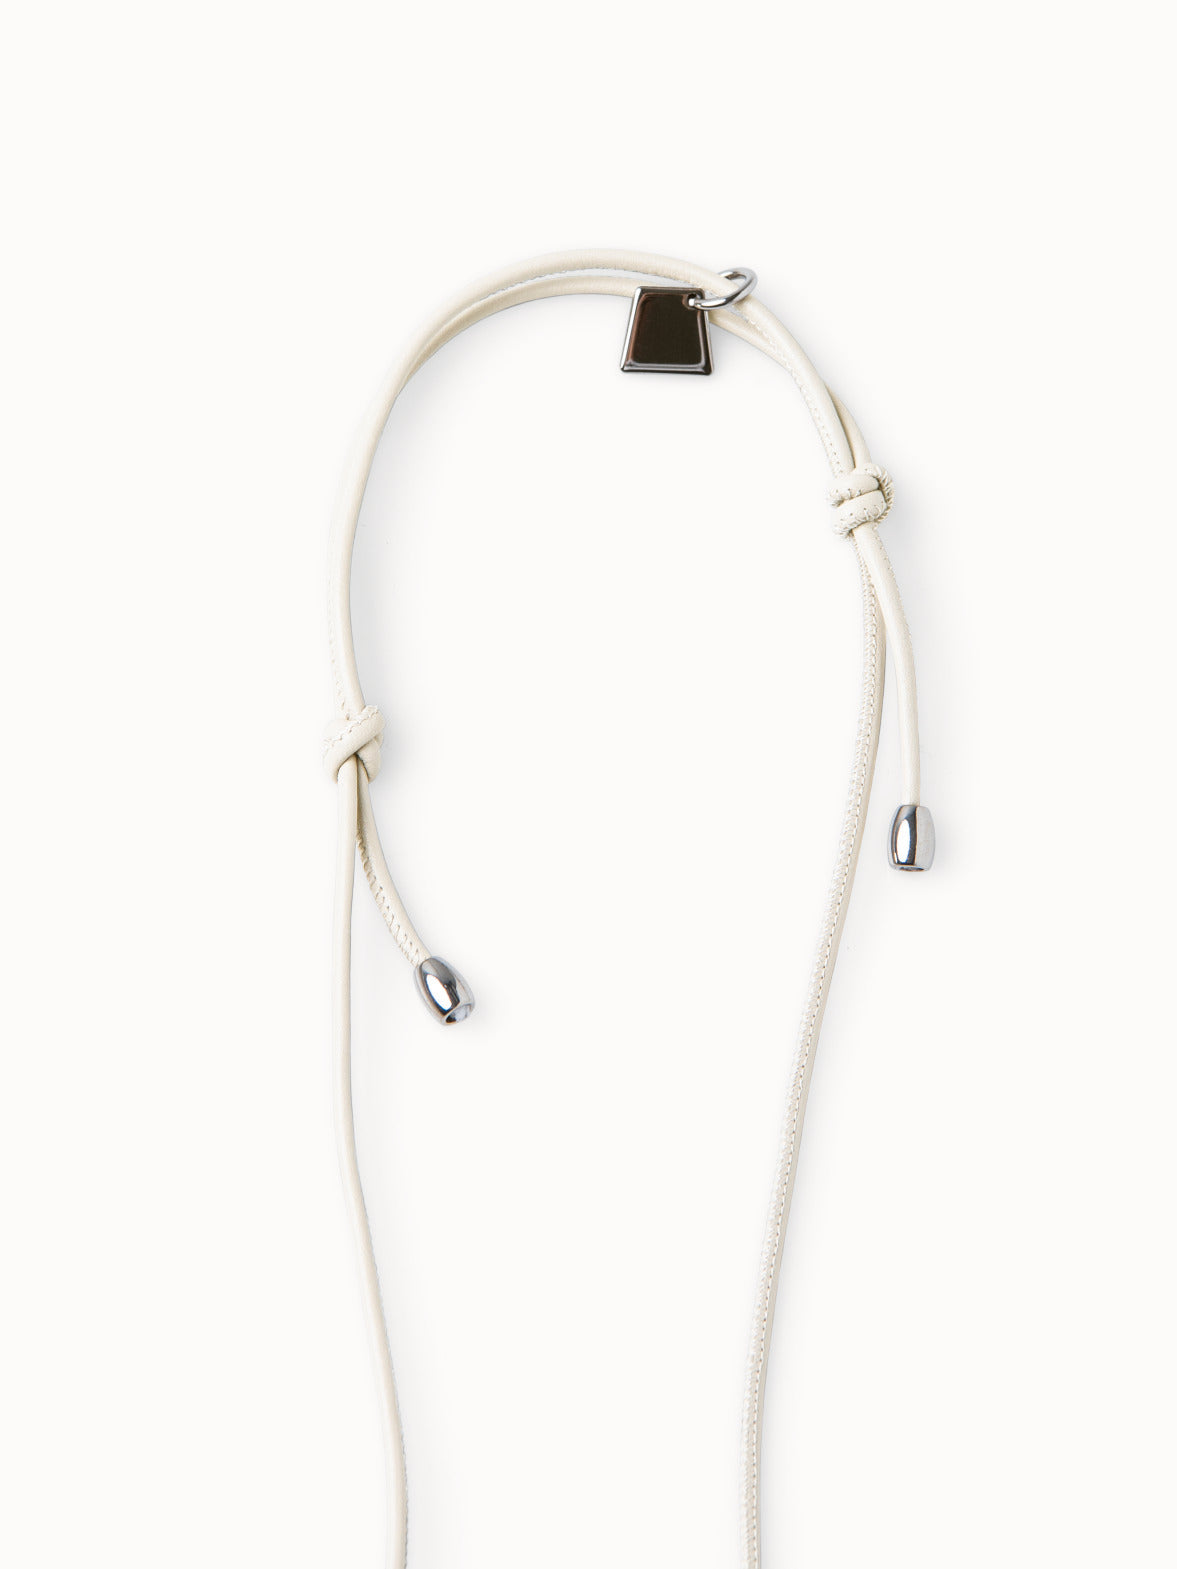 Louis Vuitton Black Silver Lockit x Doudou Bracelet